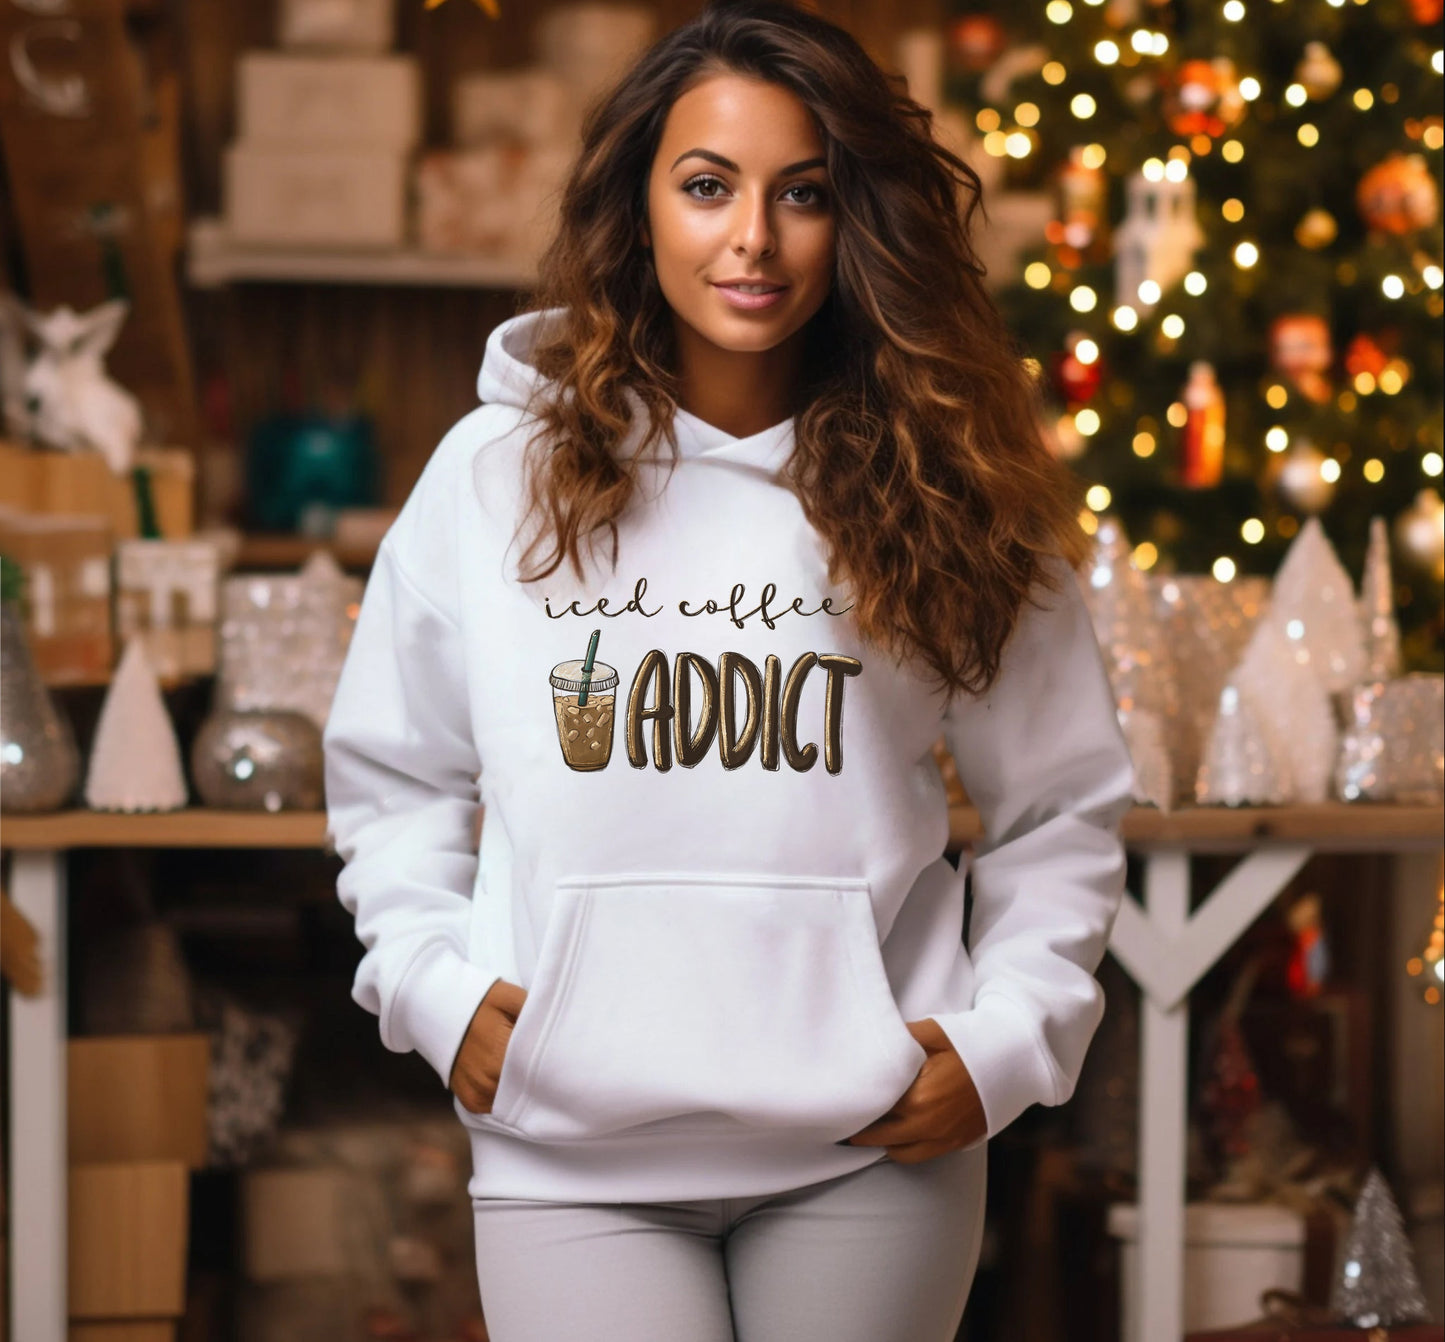 Iced Coffee Addict Sweatshirt